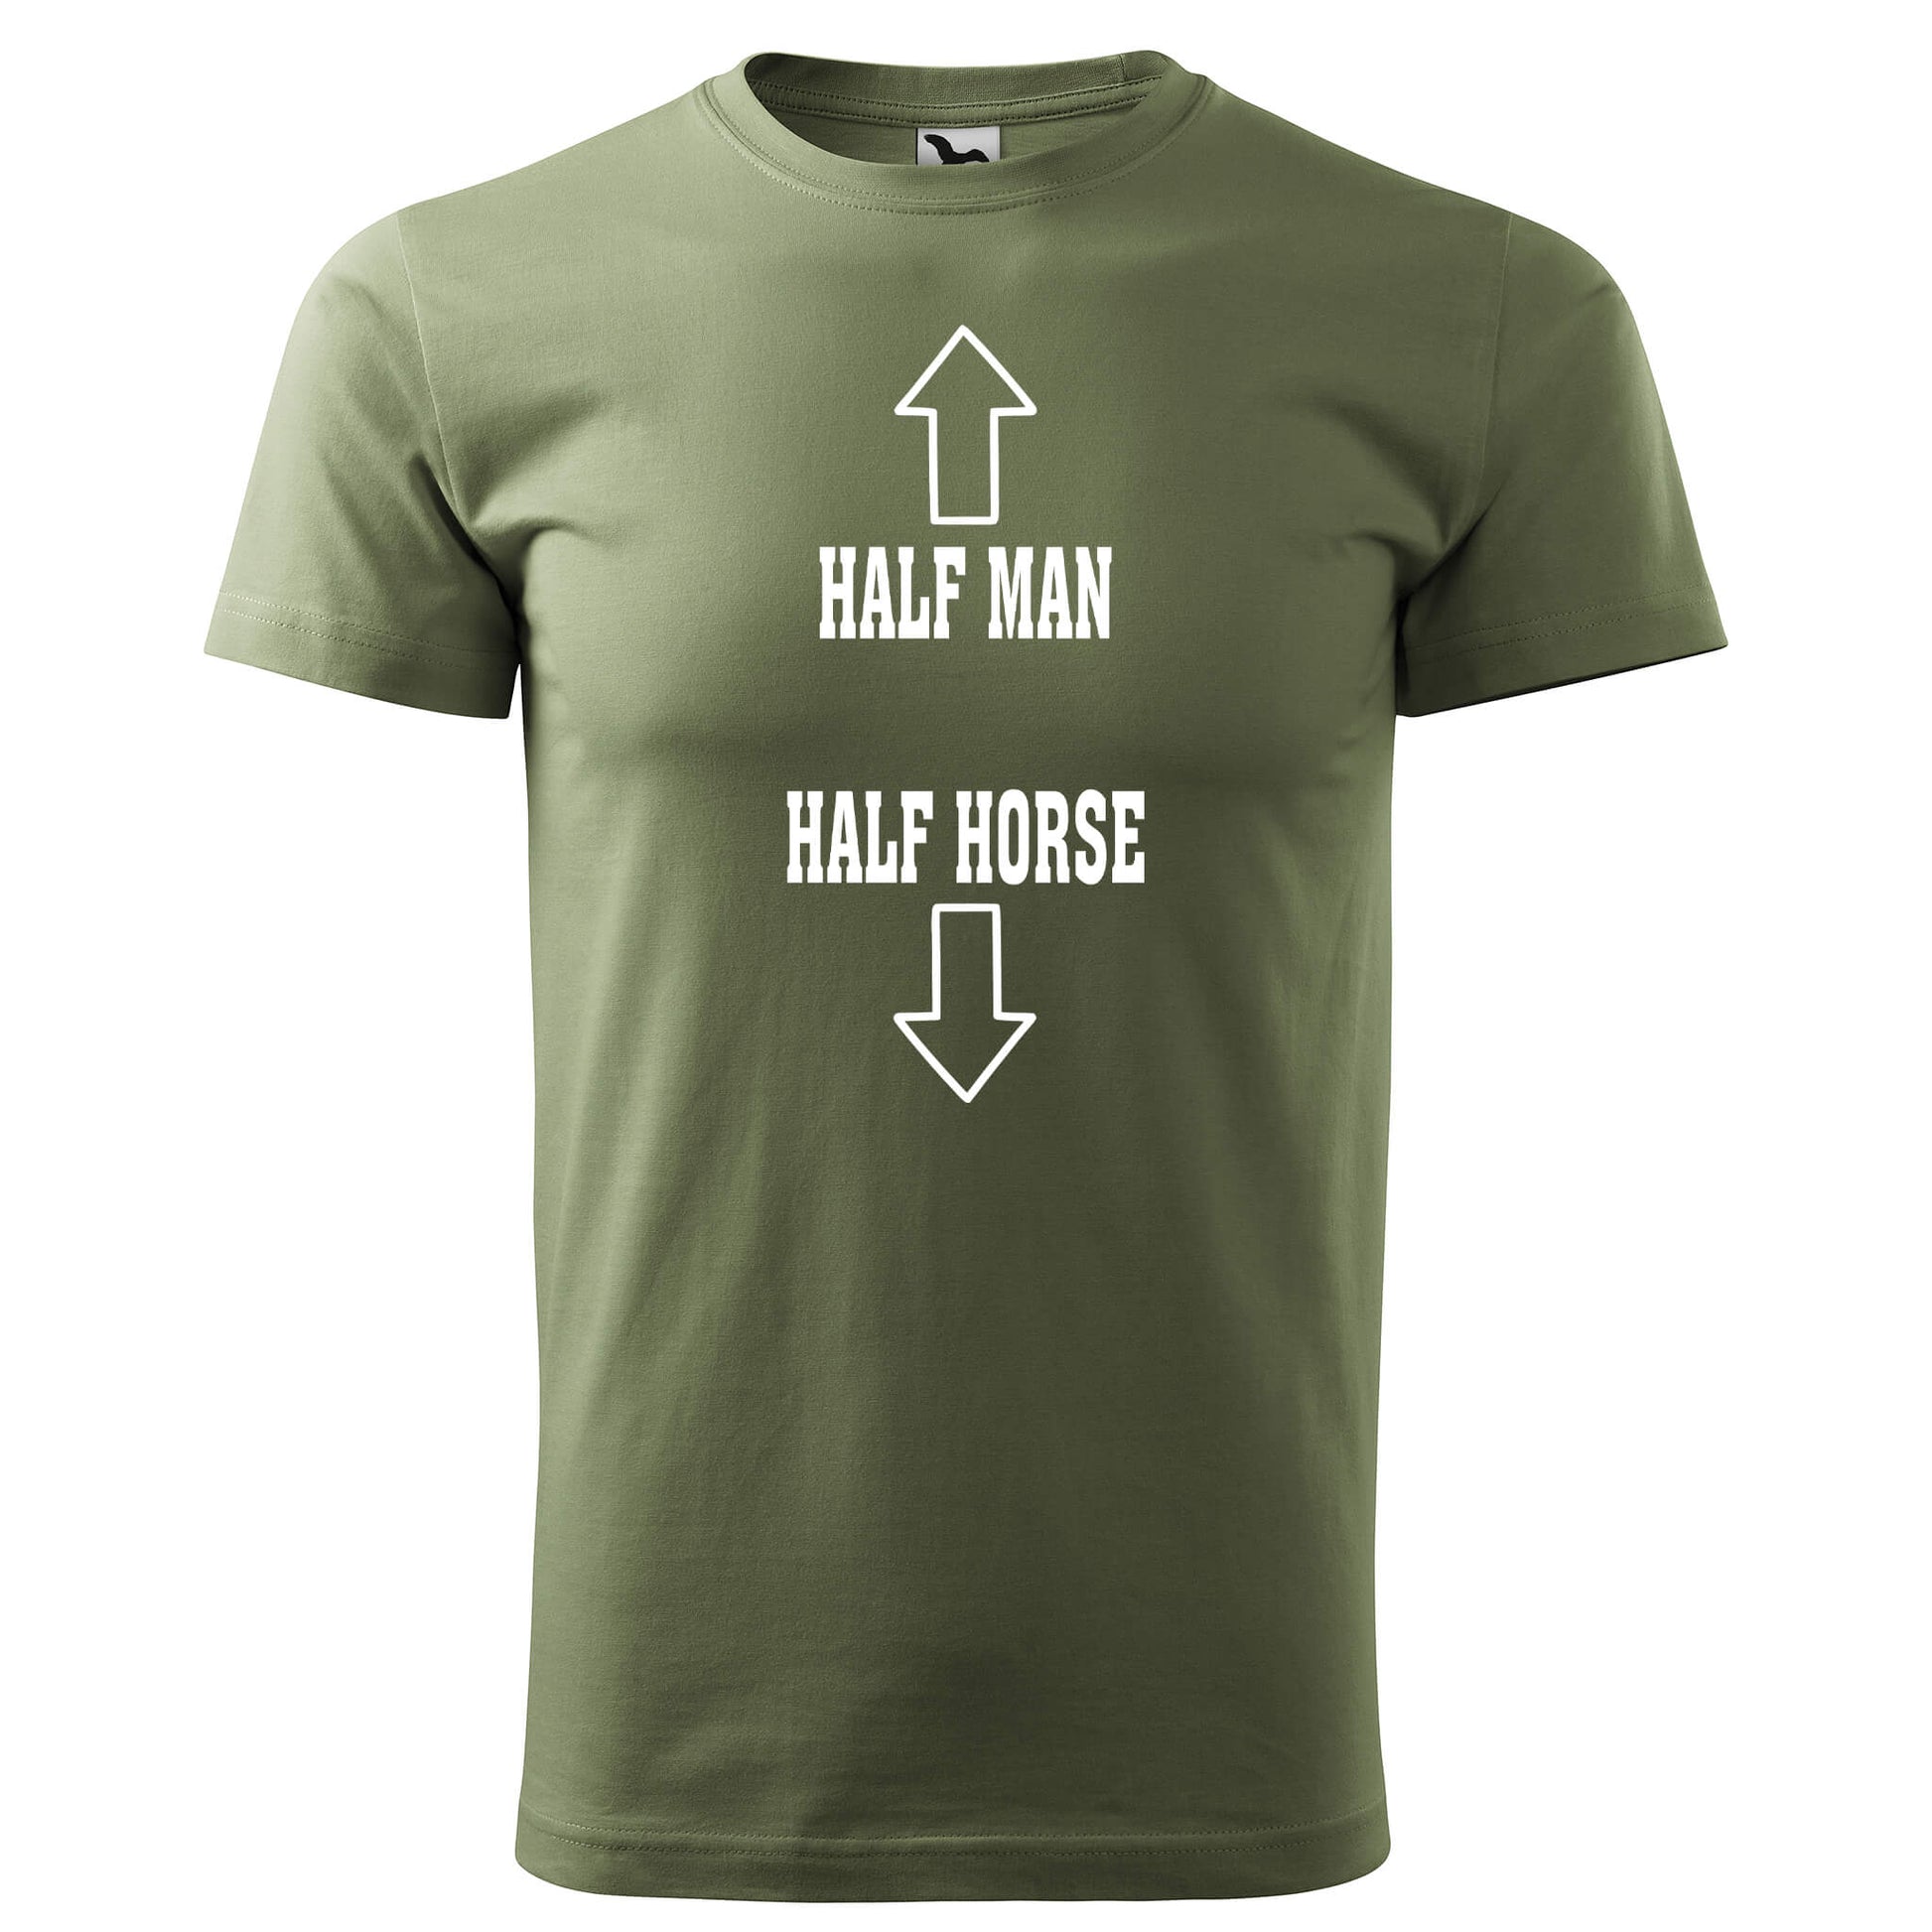 T-shirt - Half man half horse - rvdesignprint